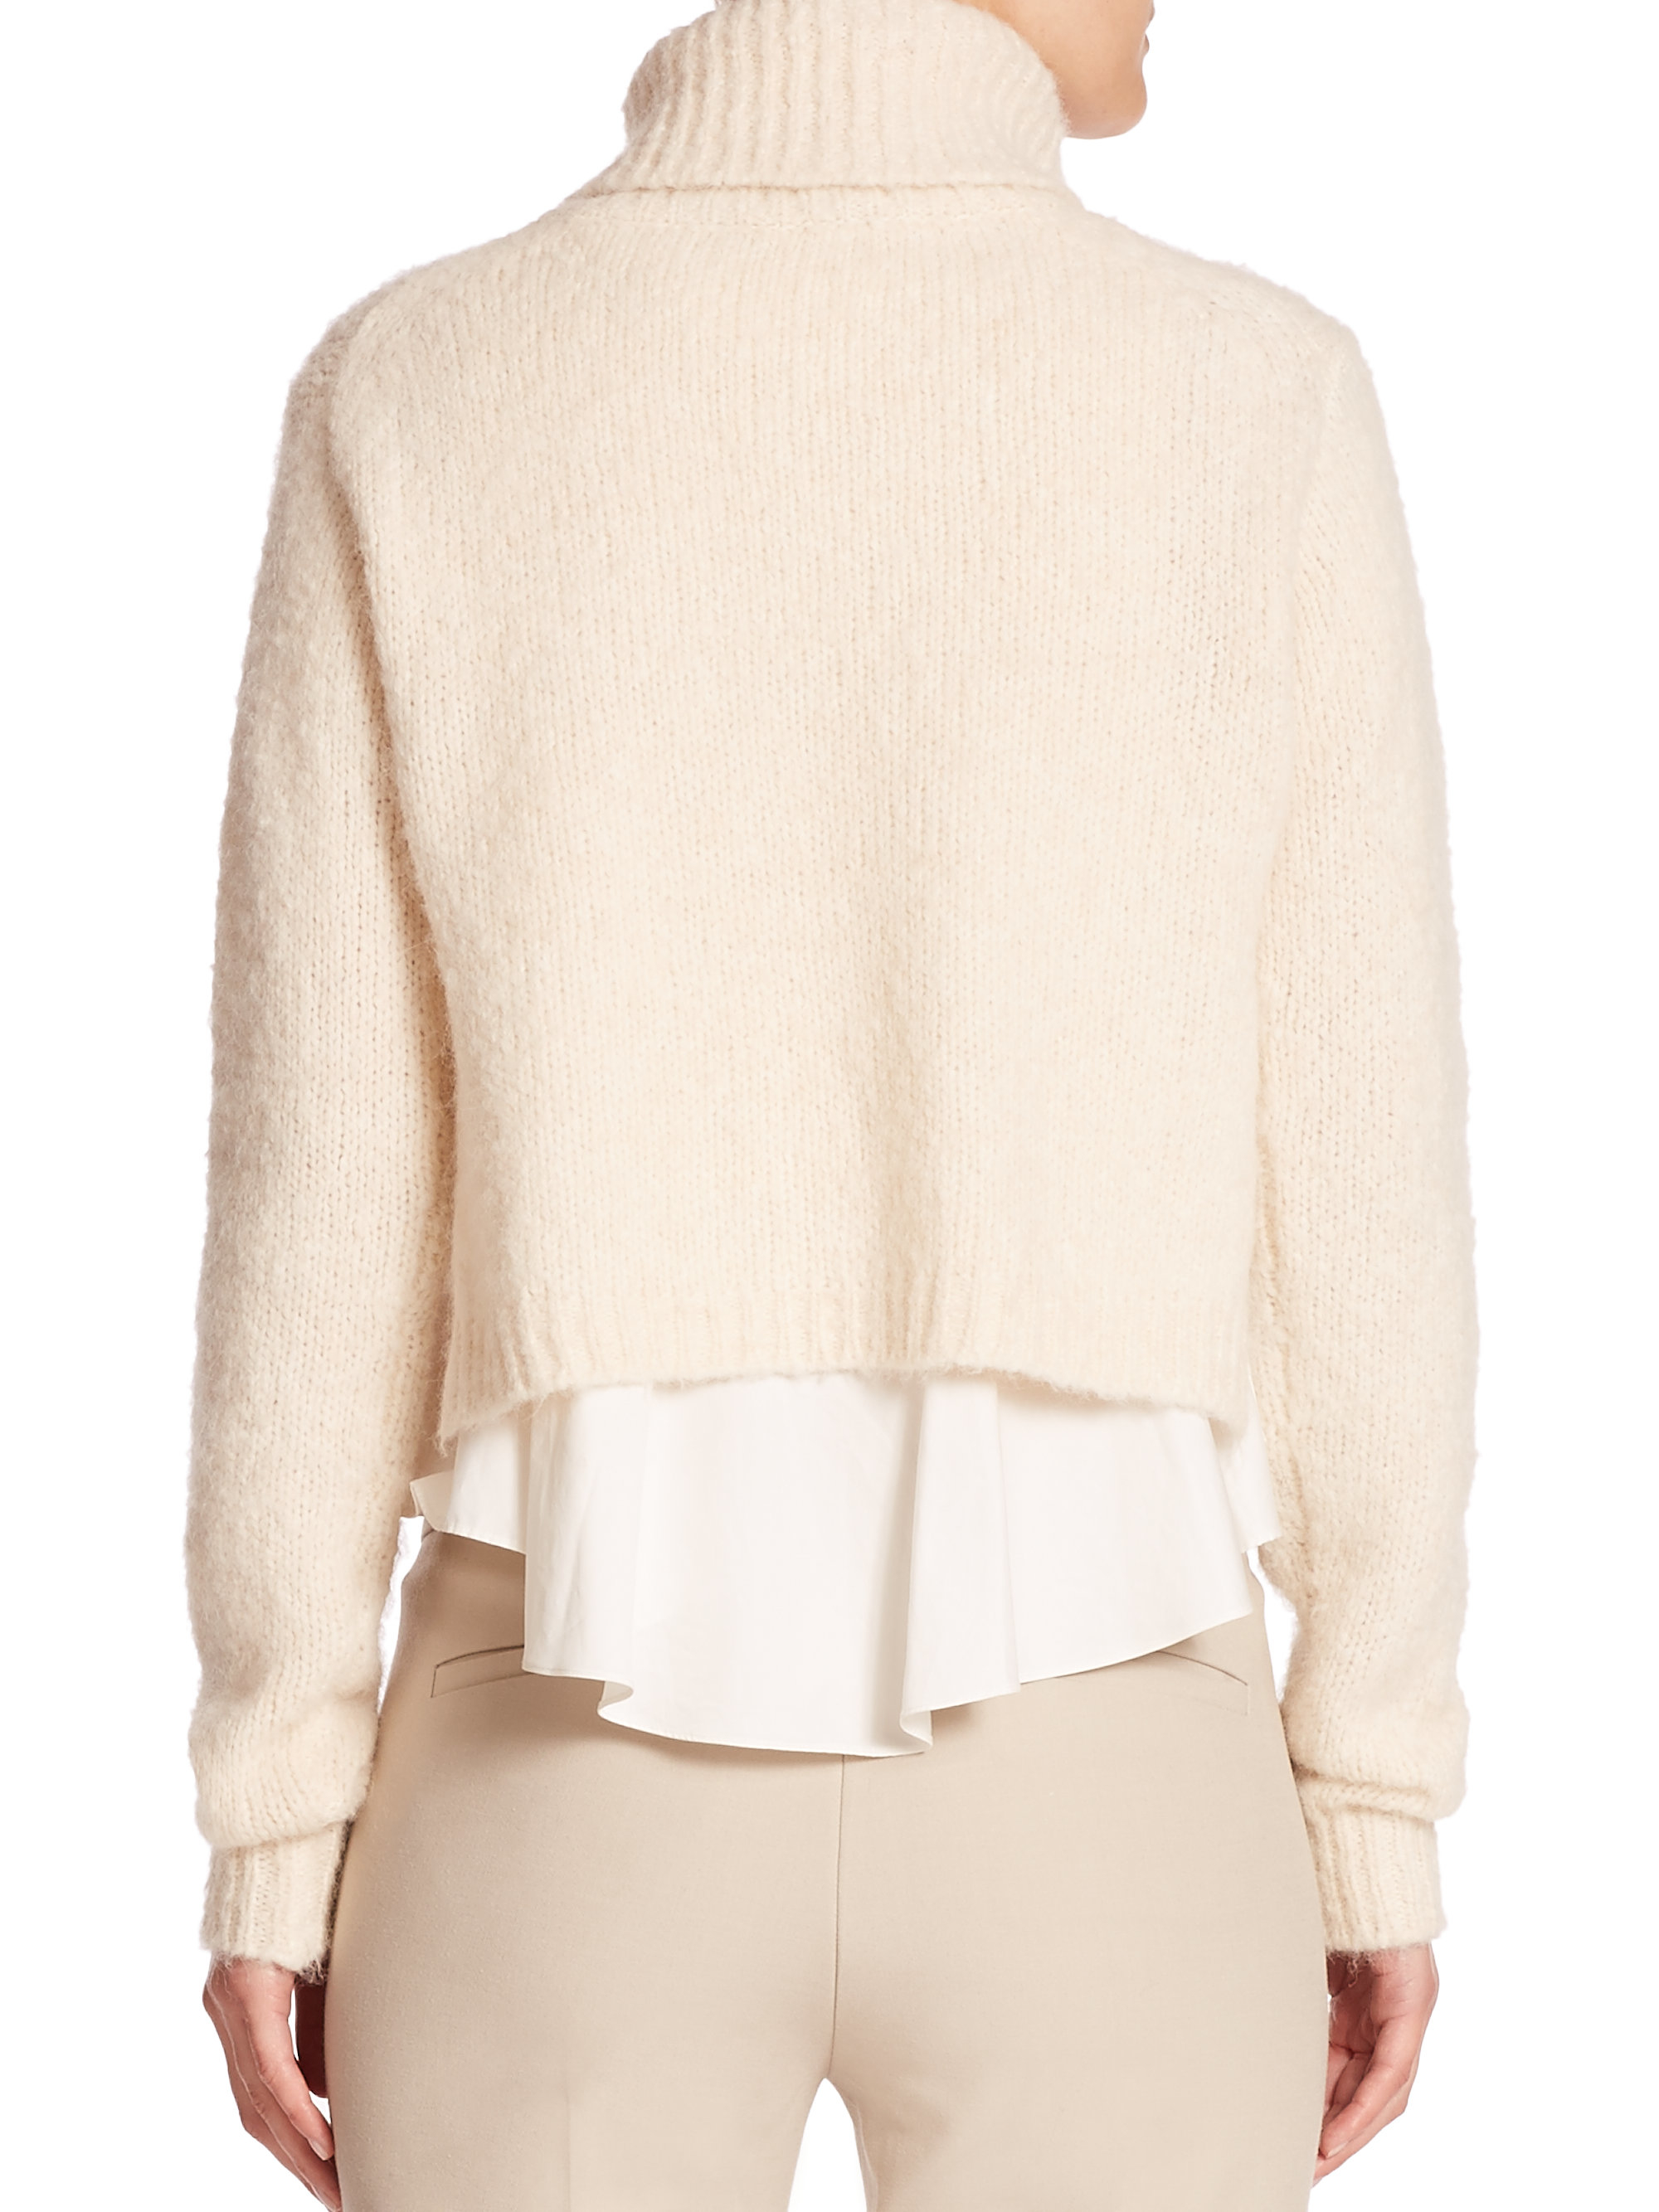 Tibi Merino Wool & Cotton Layered Cropped Sweater in White | Lyst